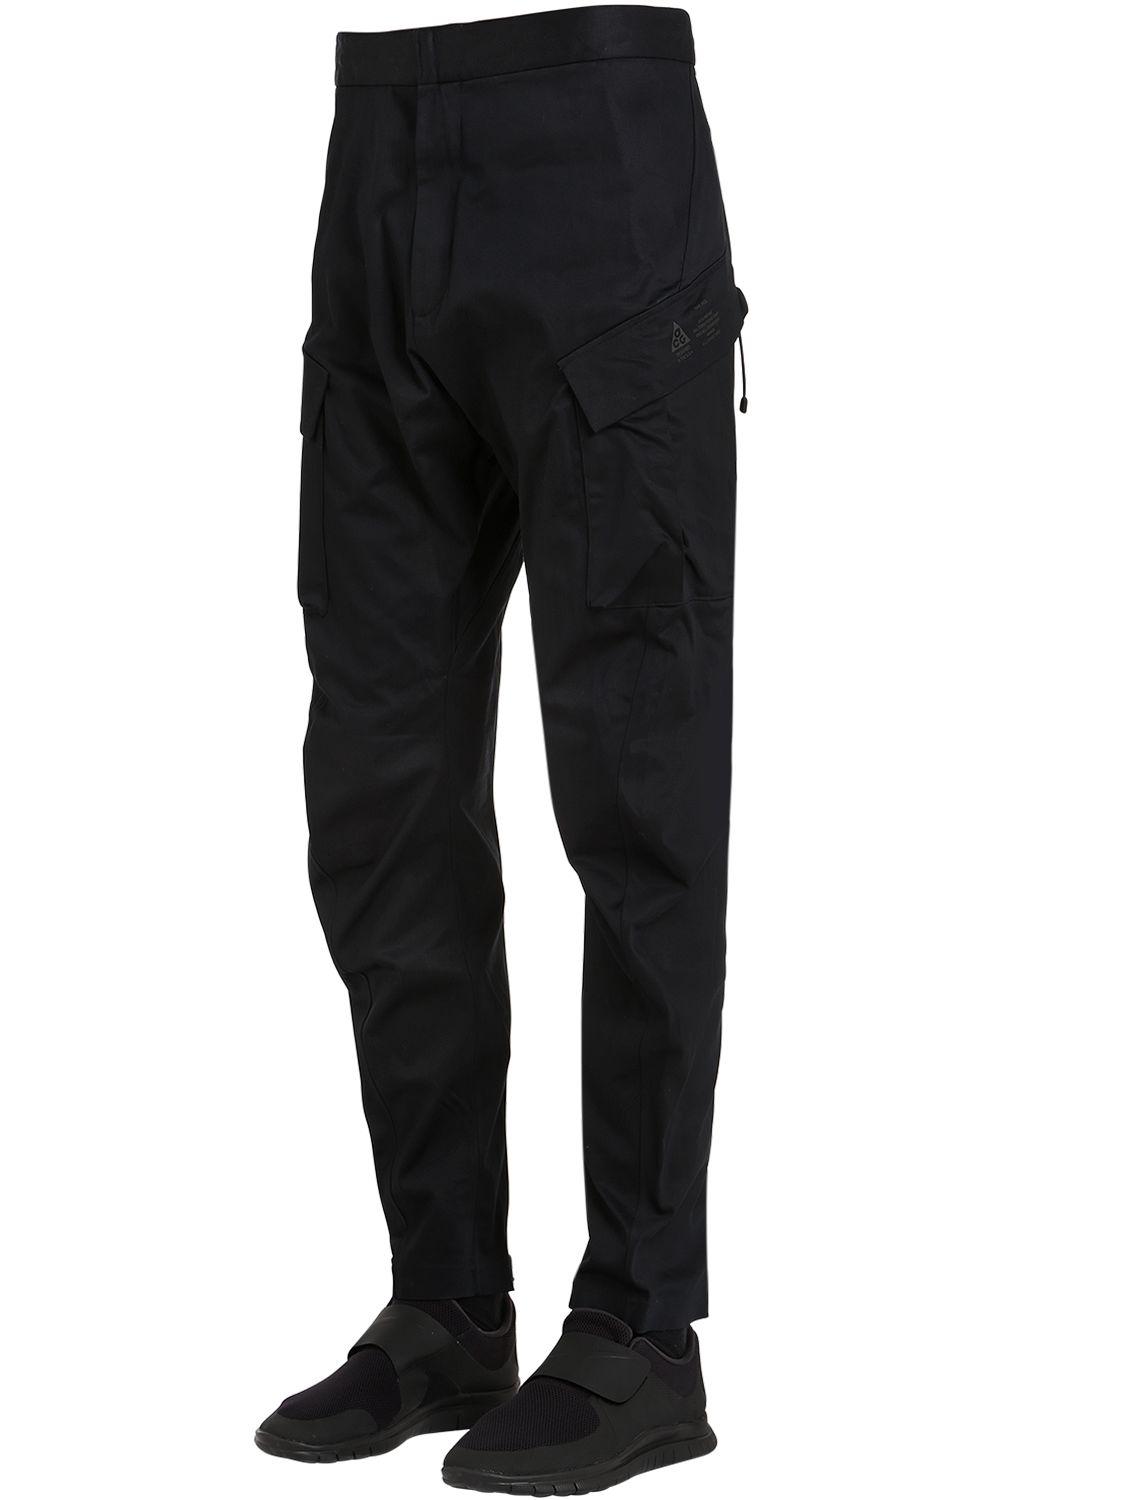 Lyst - Nike Nikelab Acg Cargo Pants in Black for Men